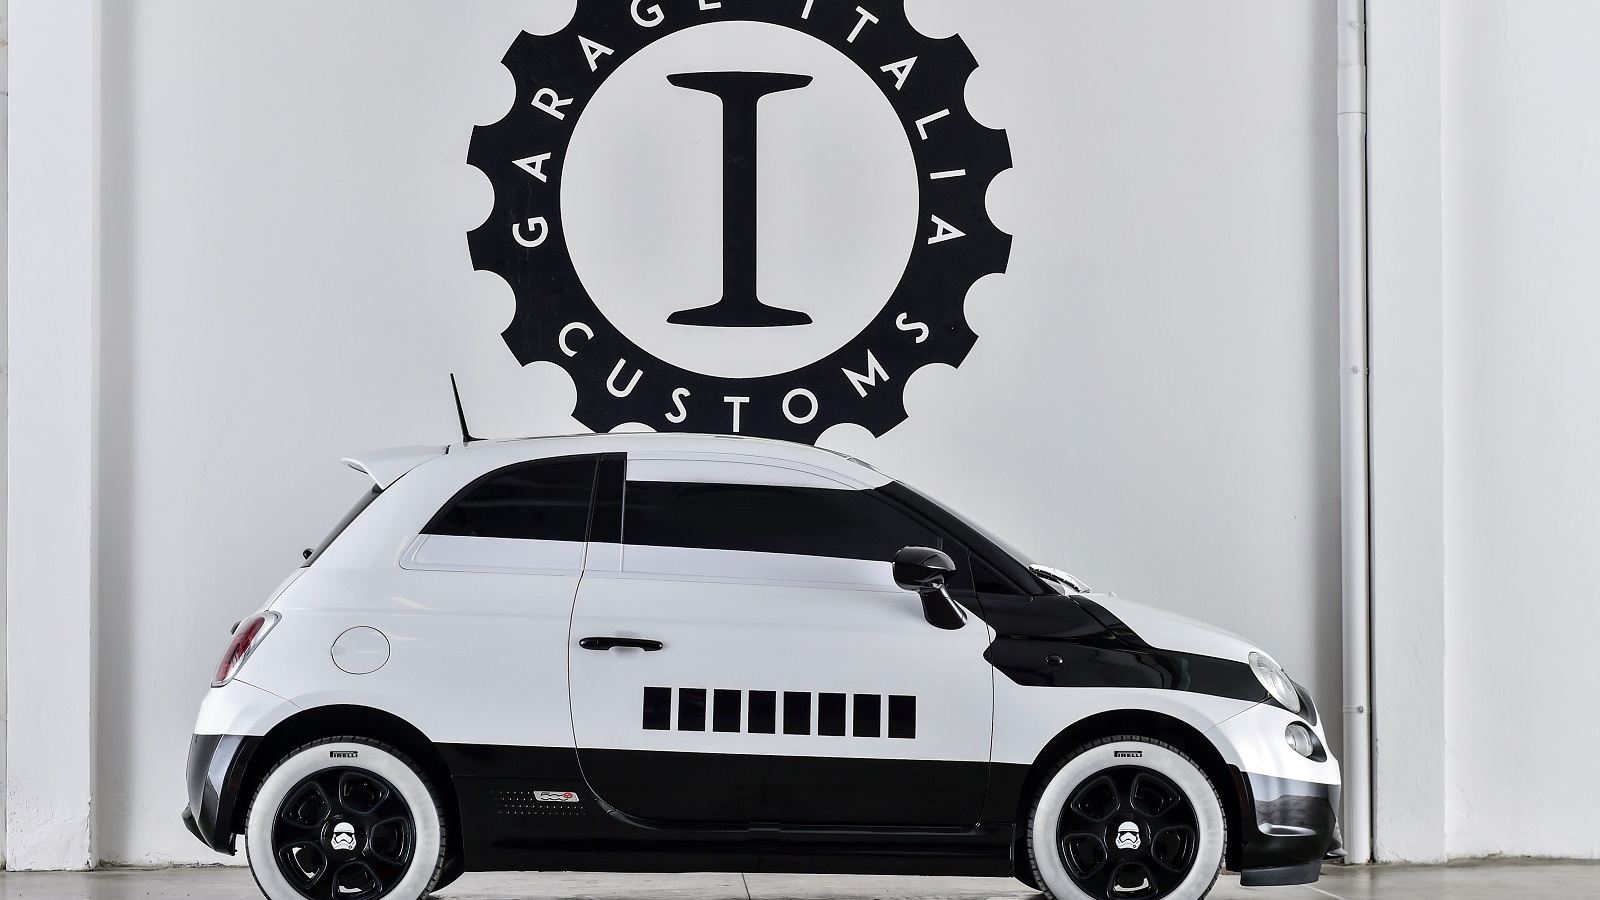 Fiat 500e 'Stormtrooper' custom electric car shown at 2015 Los Angeles Auto Show